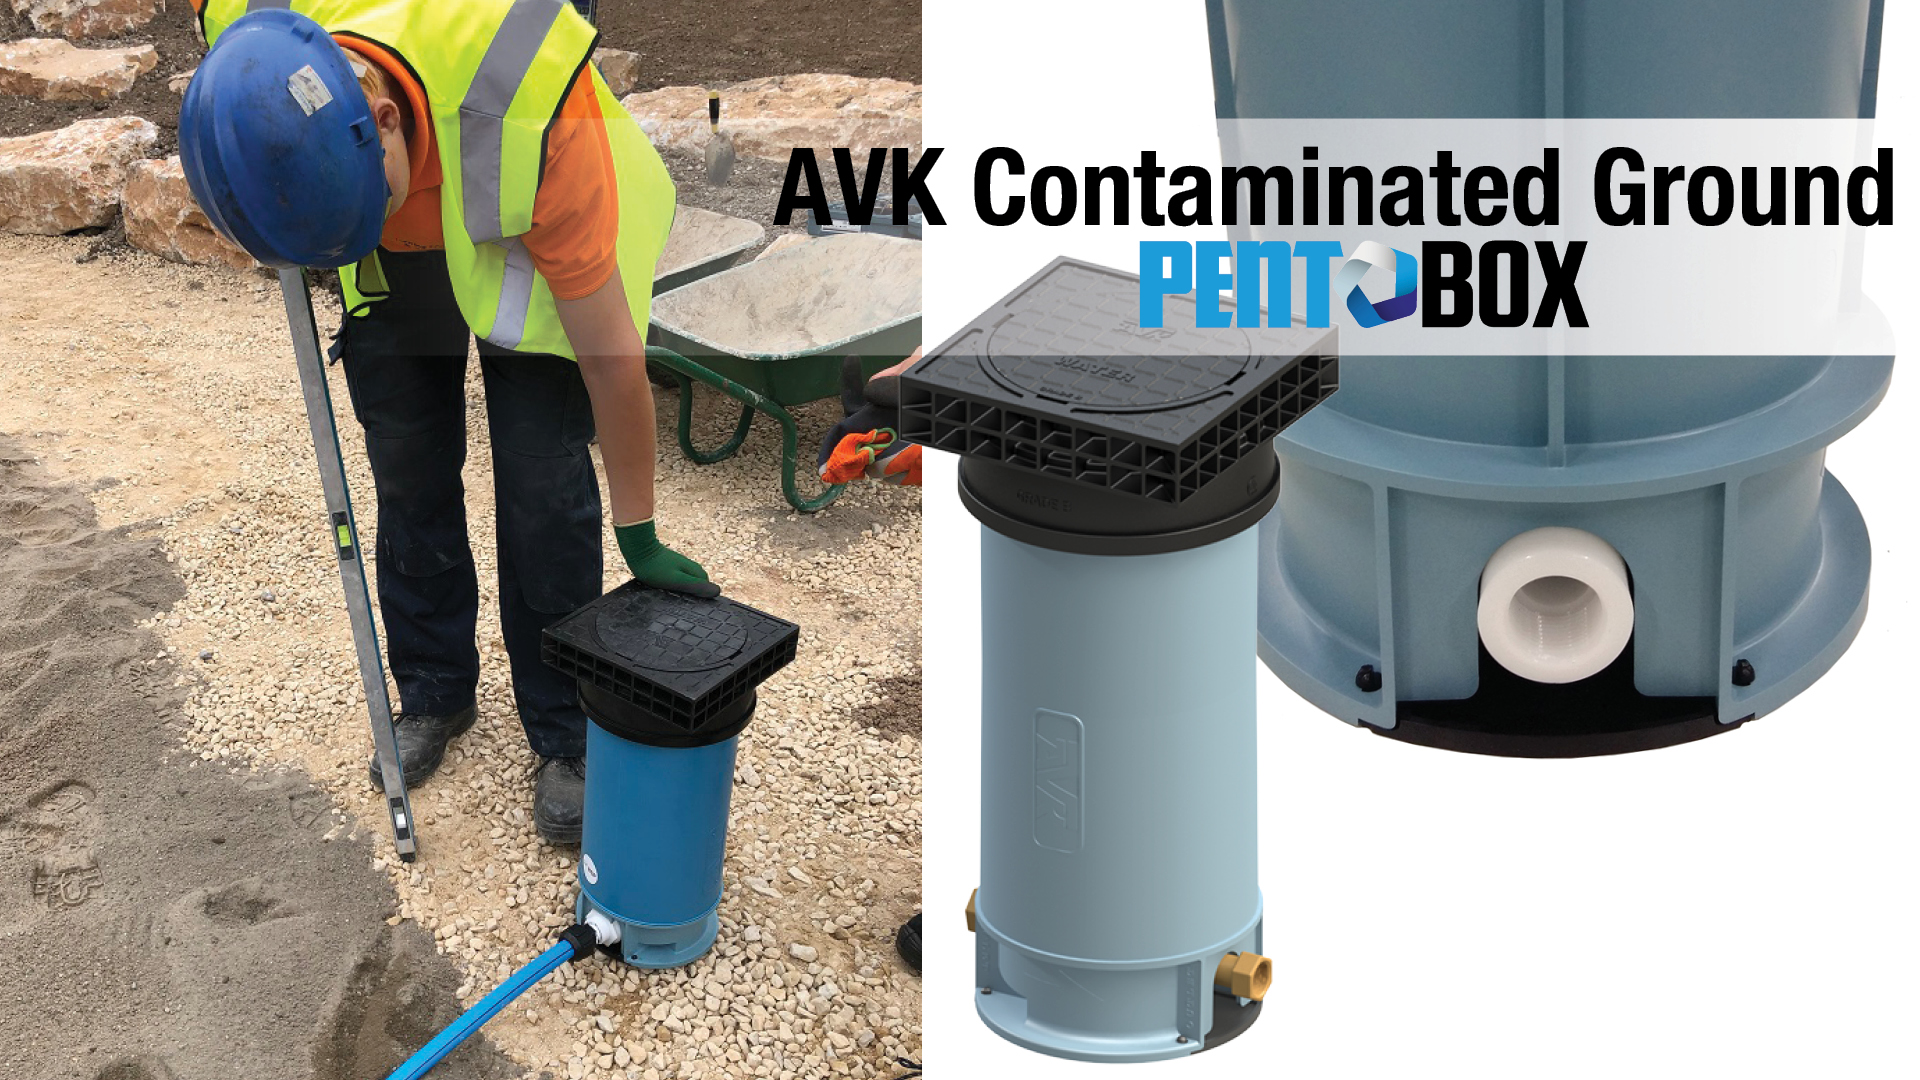 AVK Pentobox Contaminated Ground Water meter boundary boxes